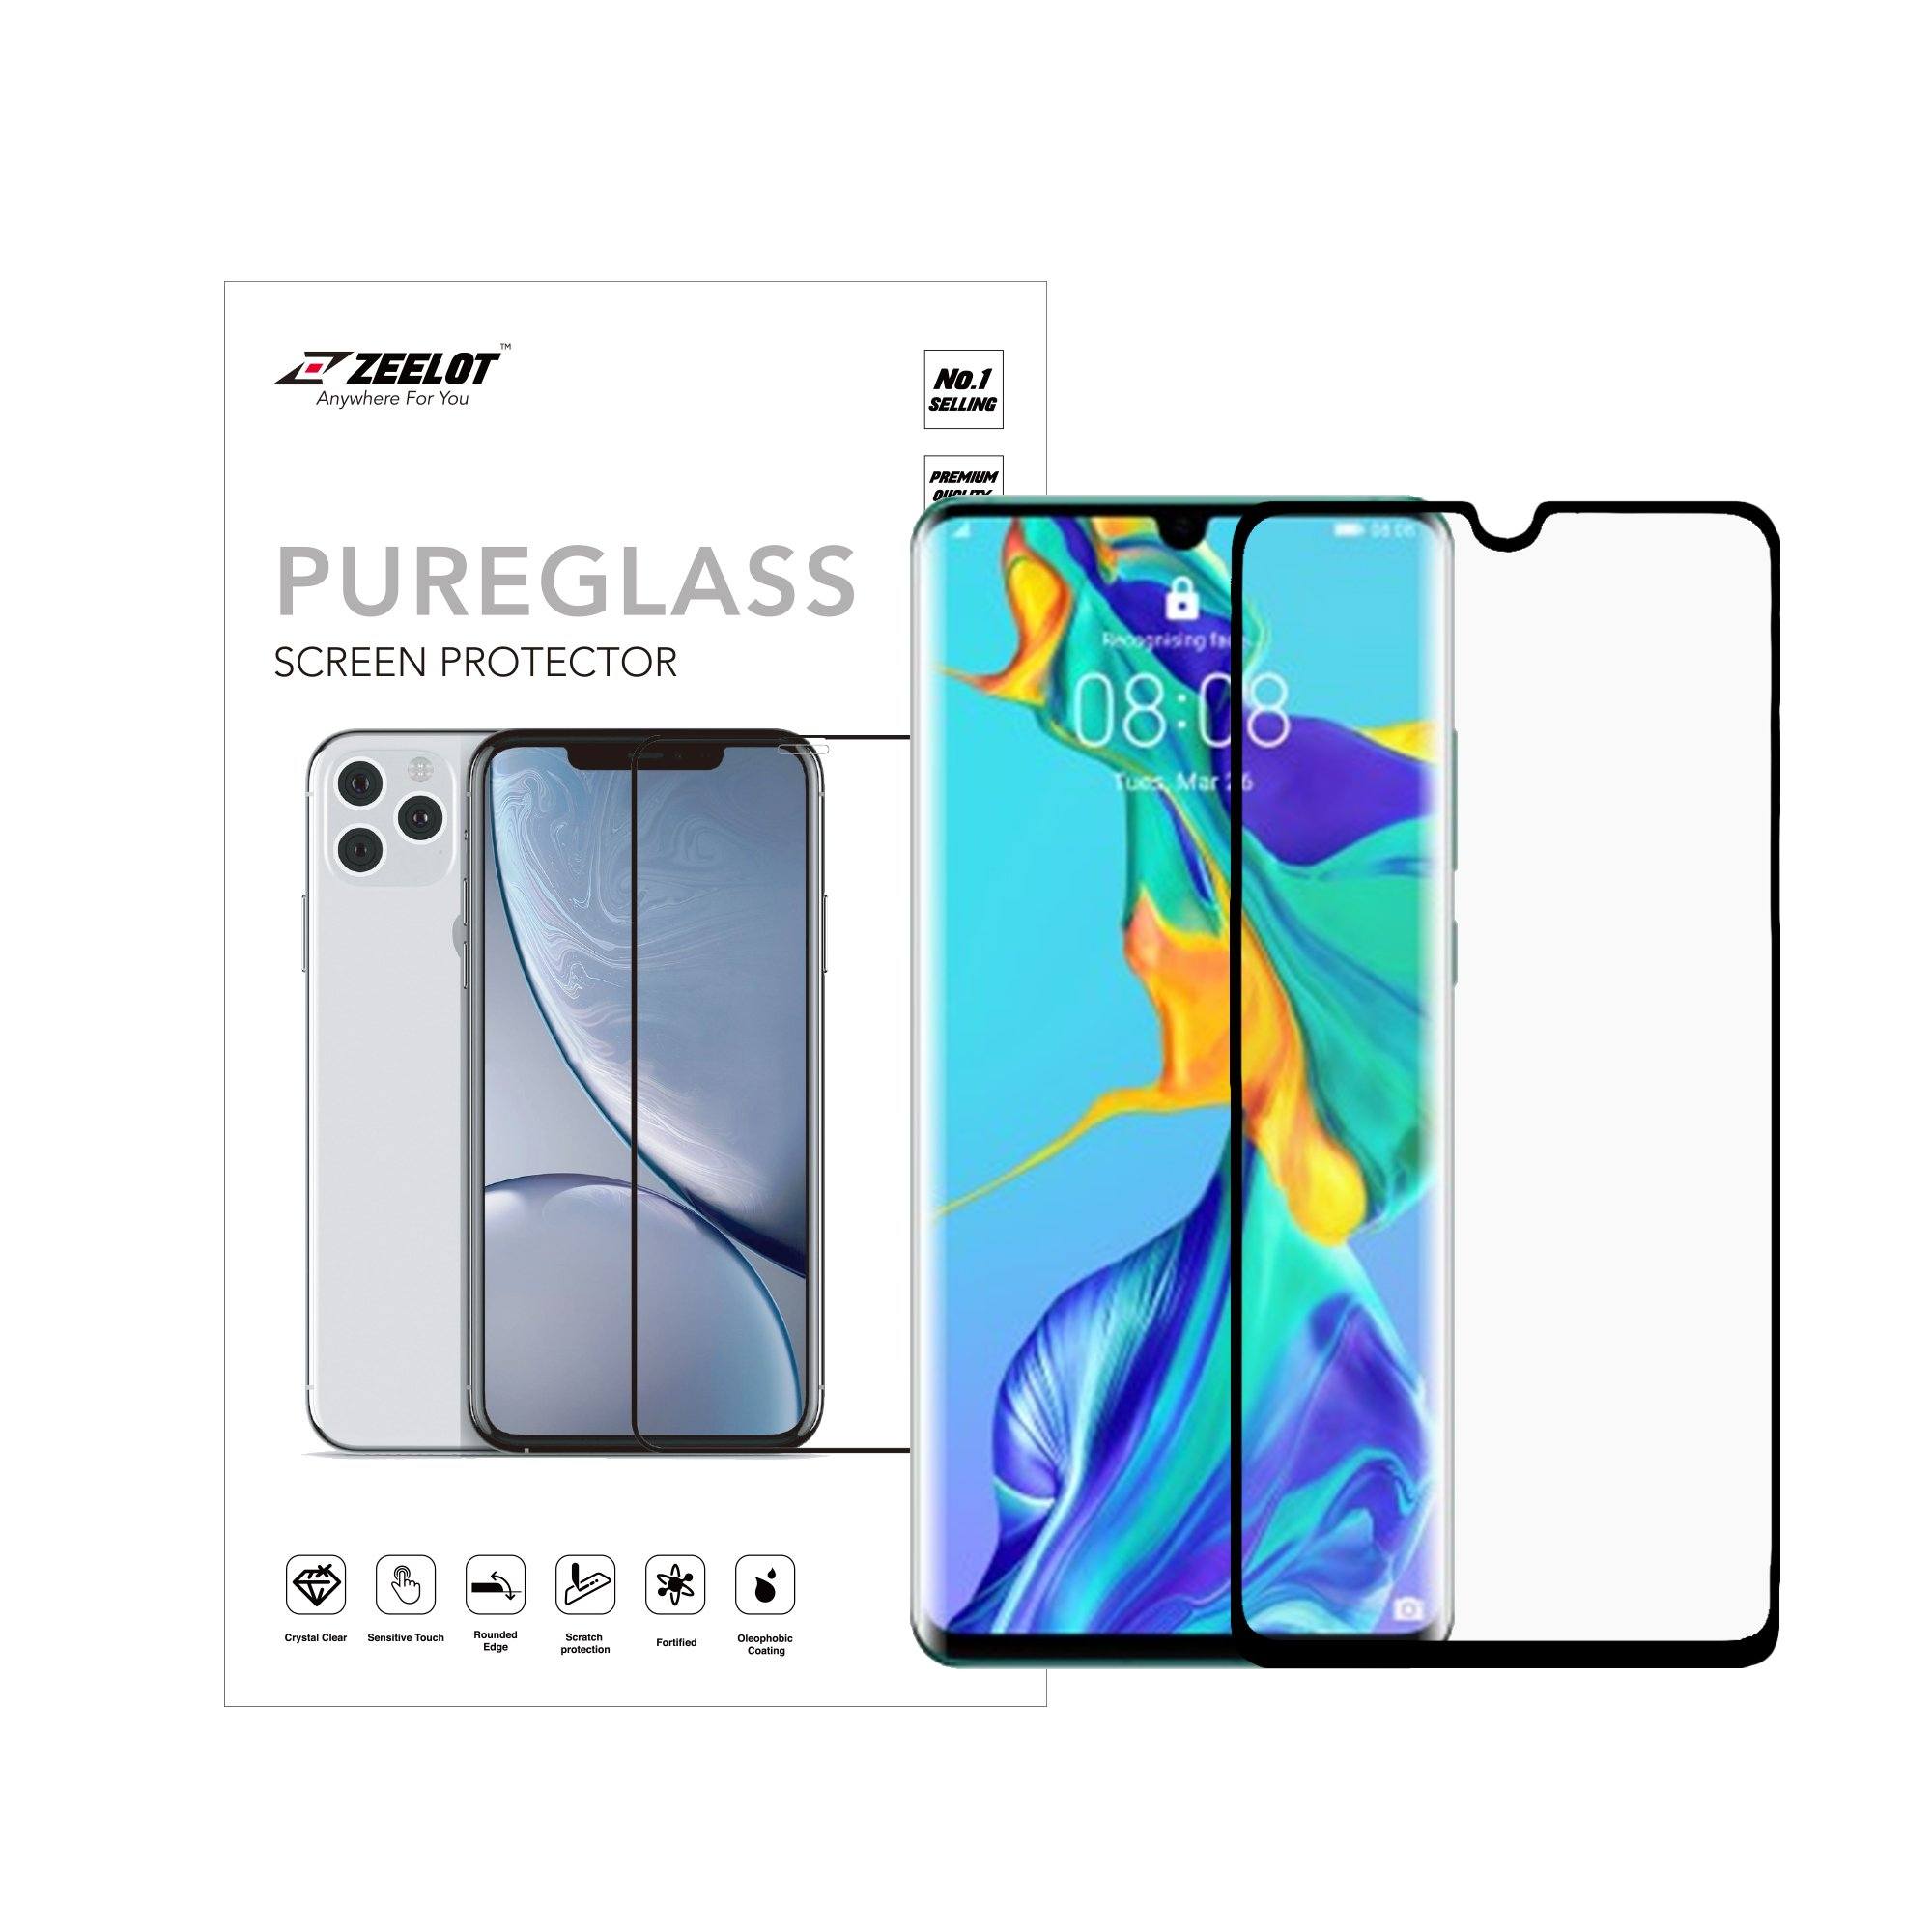 ZEELOT PureGlass 2.5D Clear Tempered Glass Screen Protector for Huawei P30(2019) Tempered Glass Zeelot 